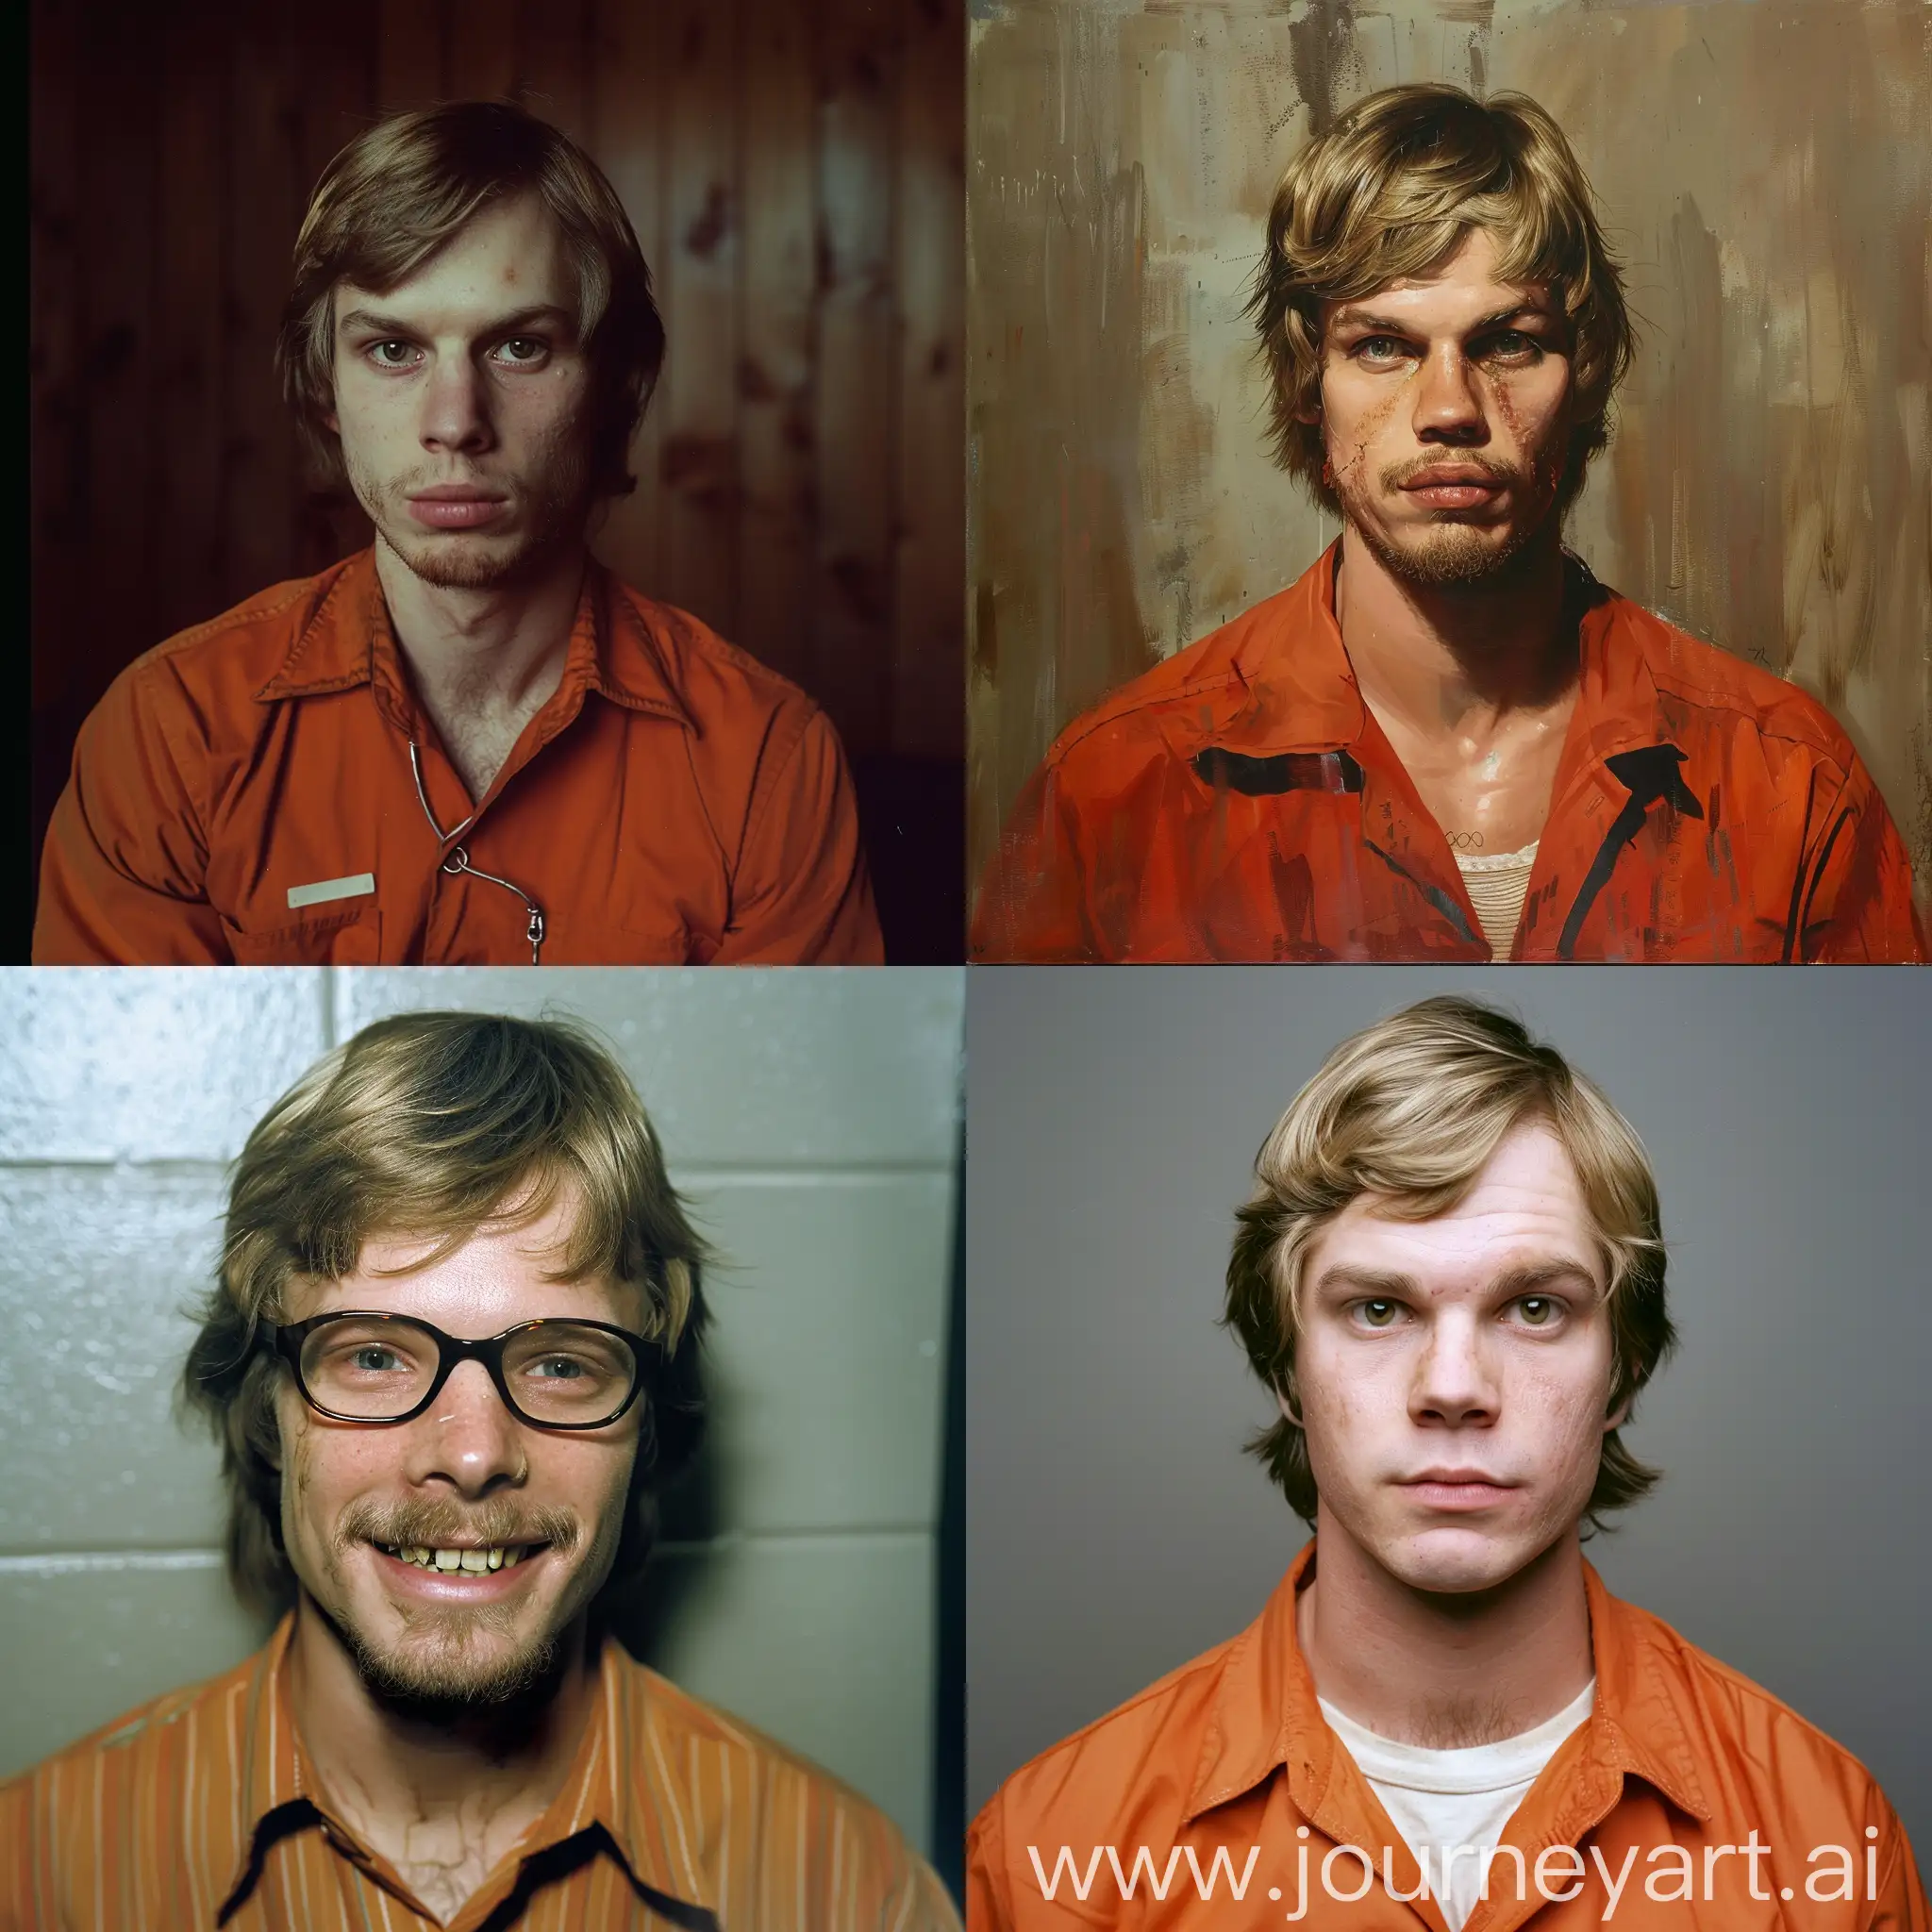 Jeffery-Dahmer-Portrait-Surrealistic-Interpretation-of-the-Infamous-Serial-Killer